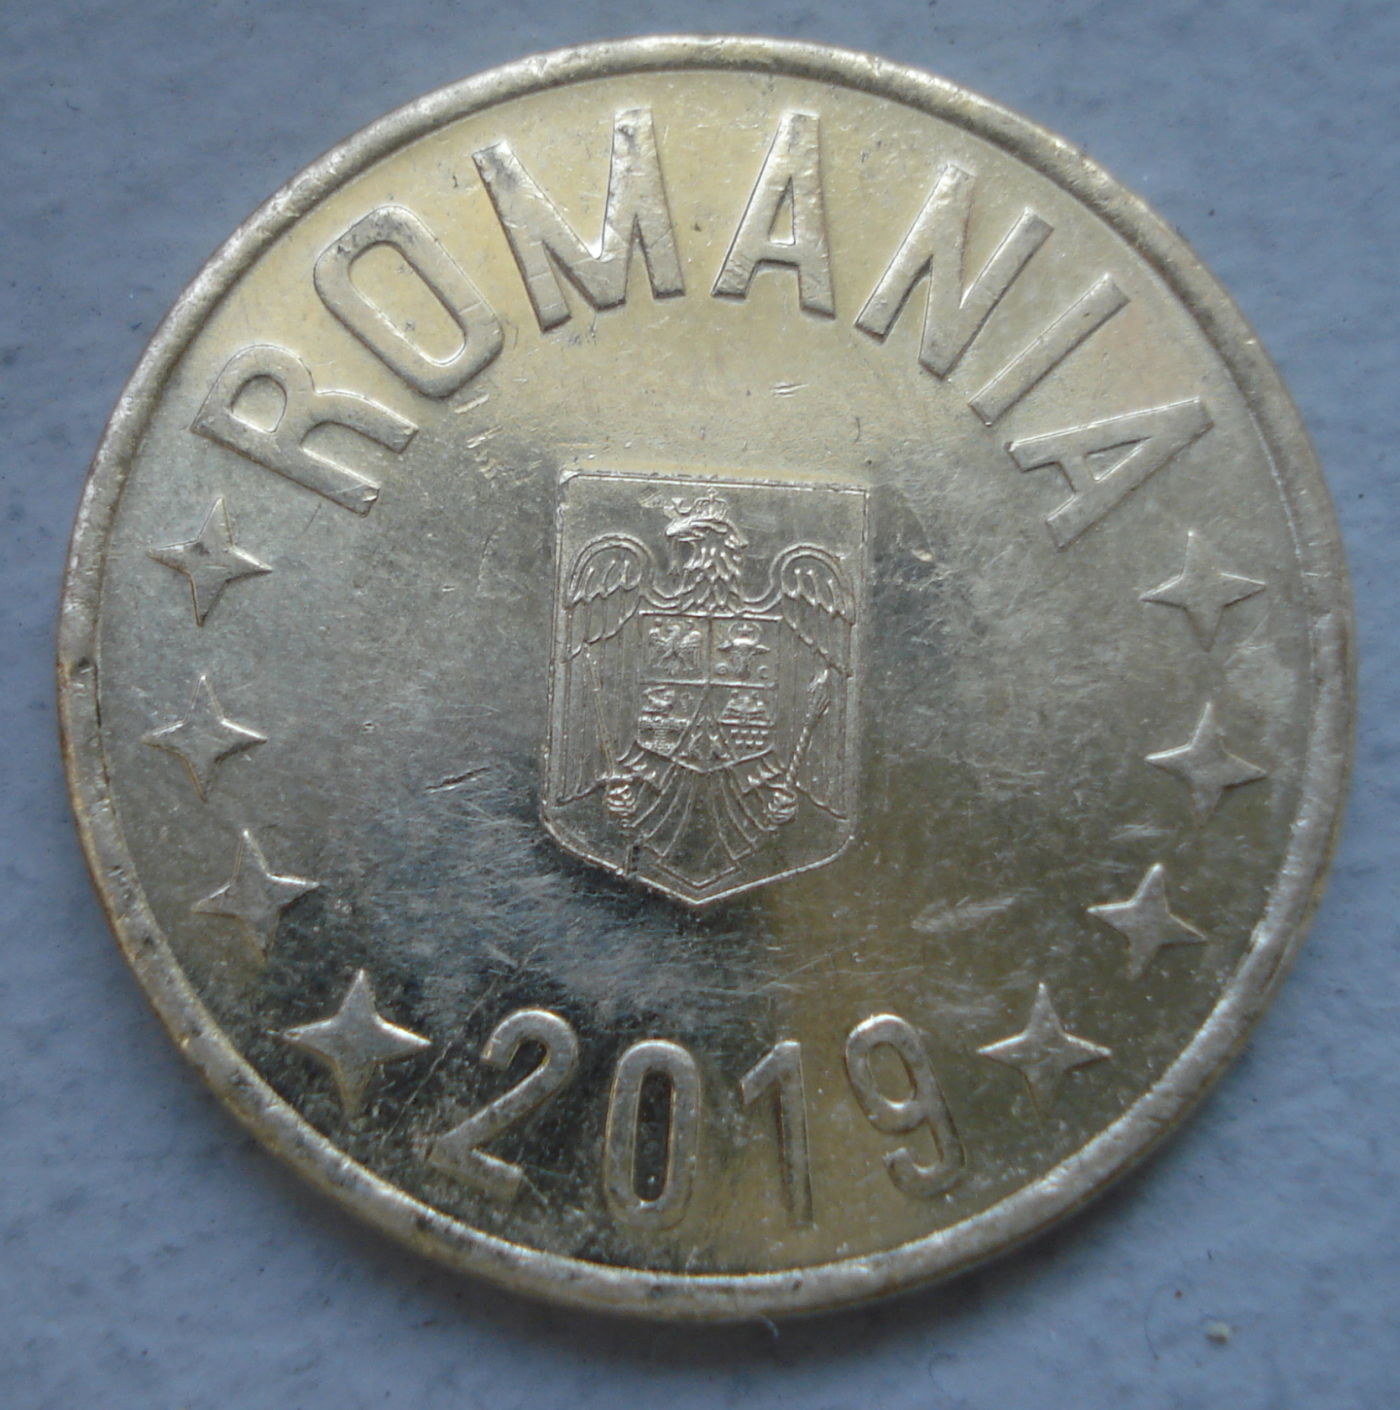 50 Bani 2019, (2018- ) Issue - 50 Bani - Romania - Coin - 43763